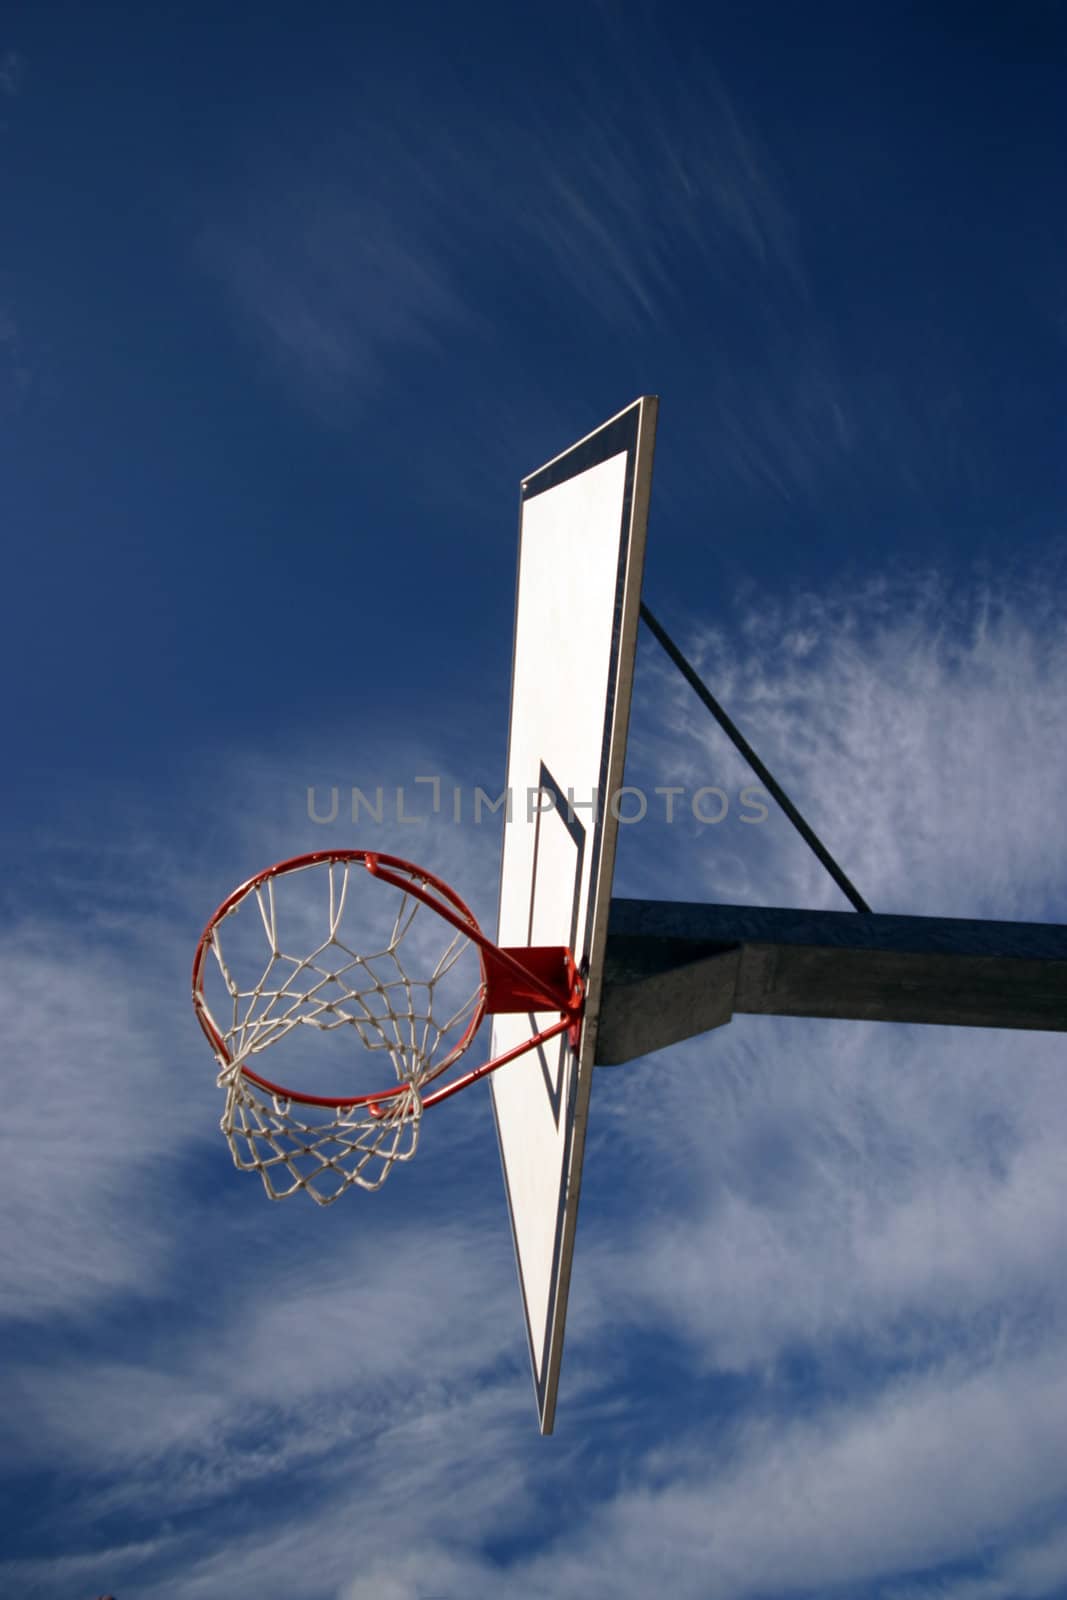 basketball board against blue sky